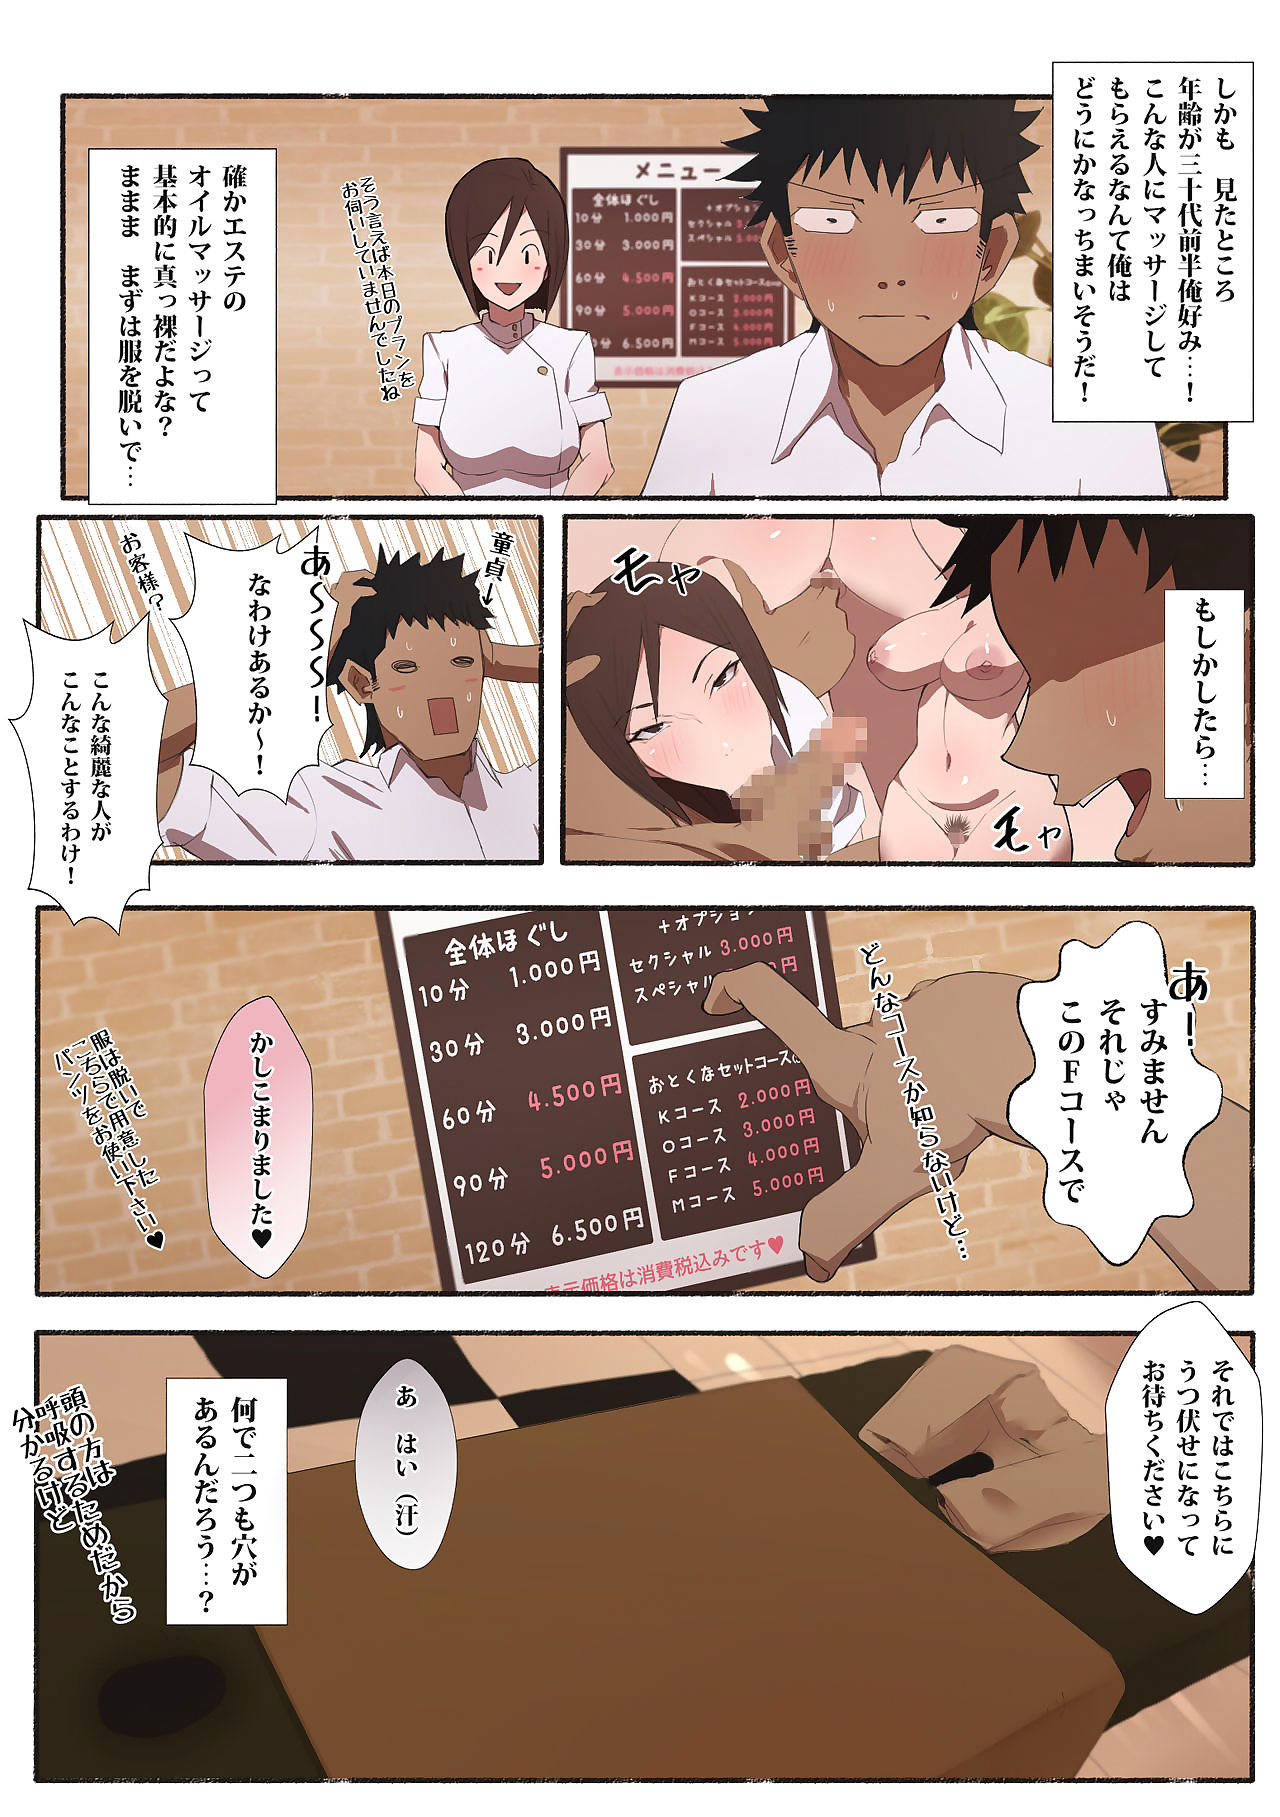 hataraku oneesan - Эротические салон page 1